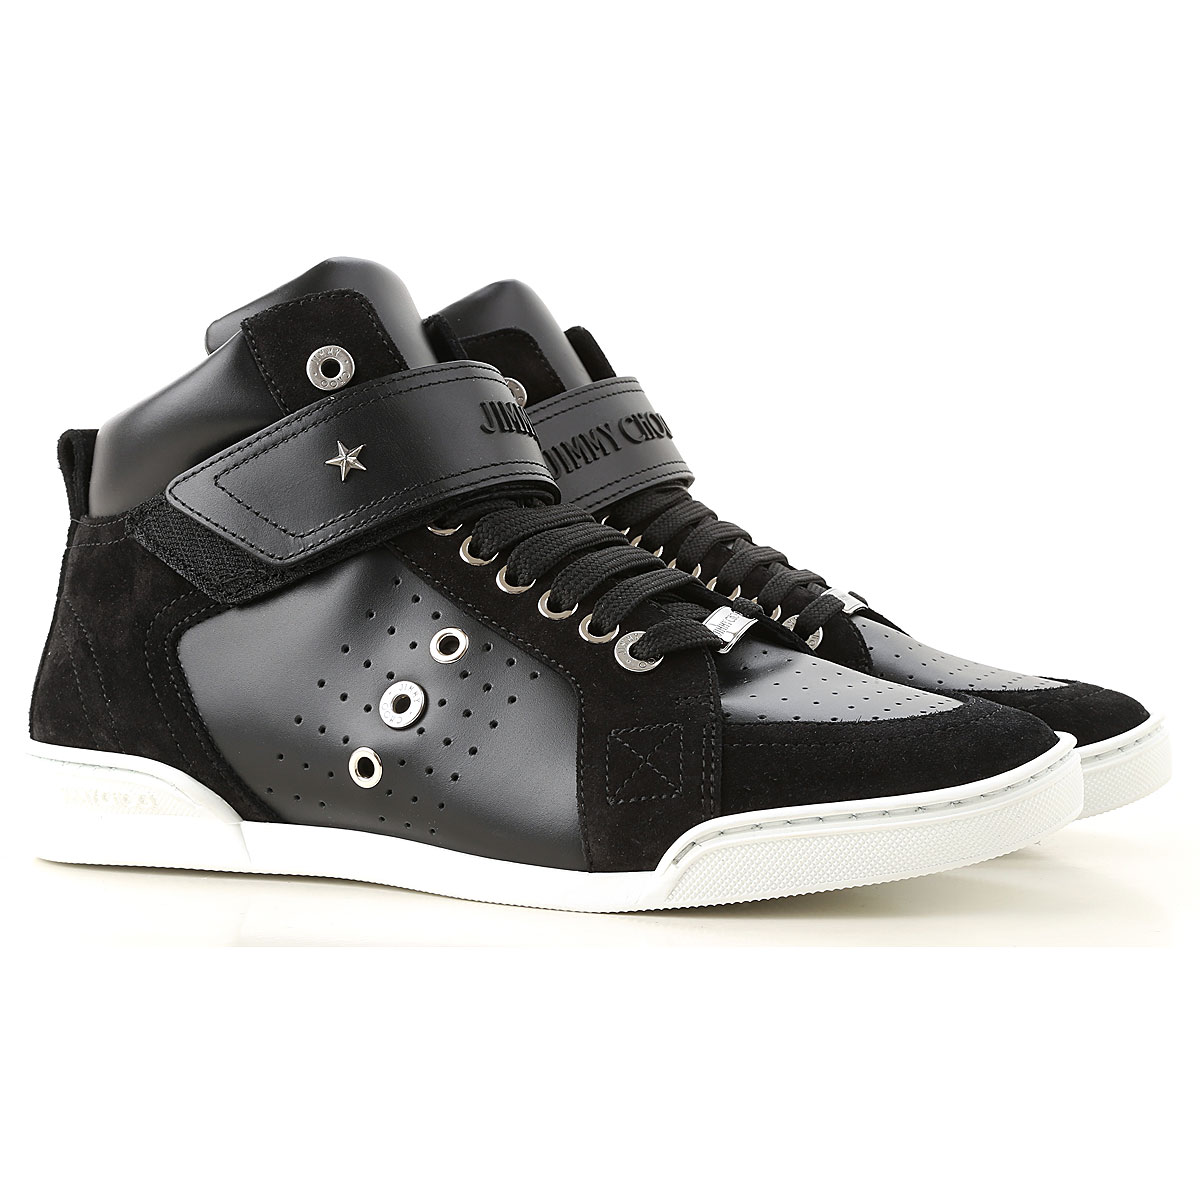 Mens Shoes Jimmy Choo, Style code: lewis-ocu163-black